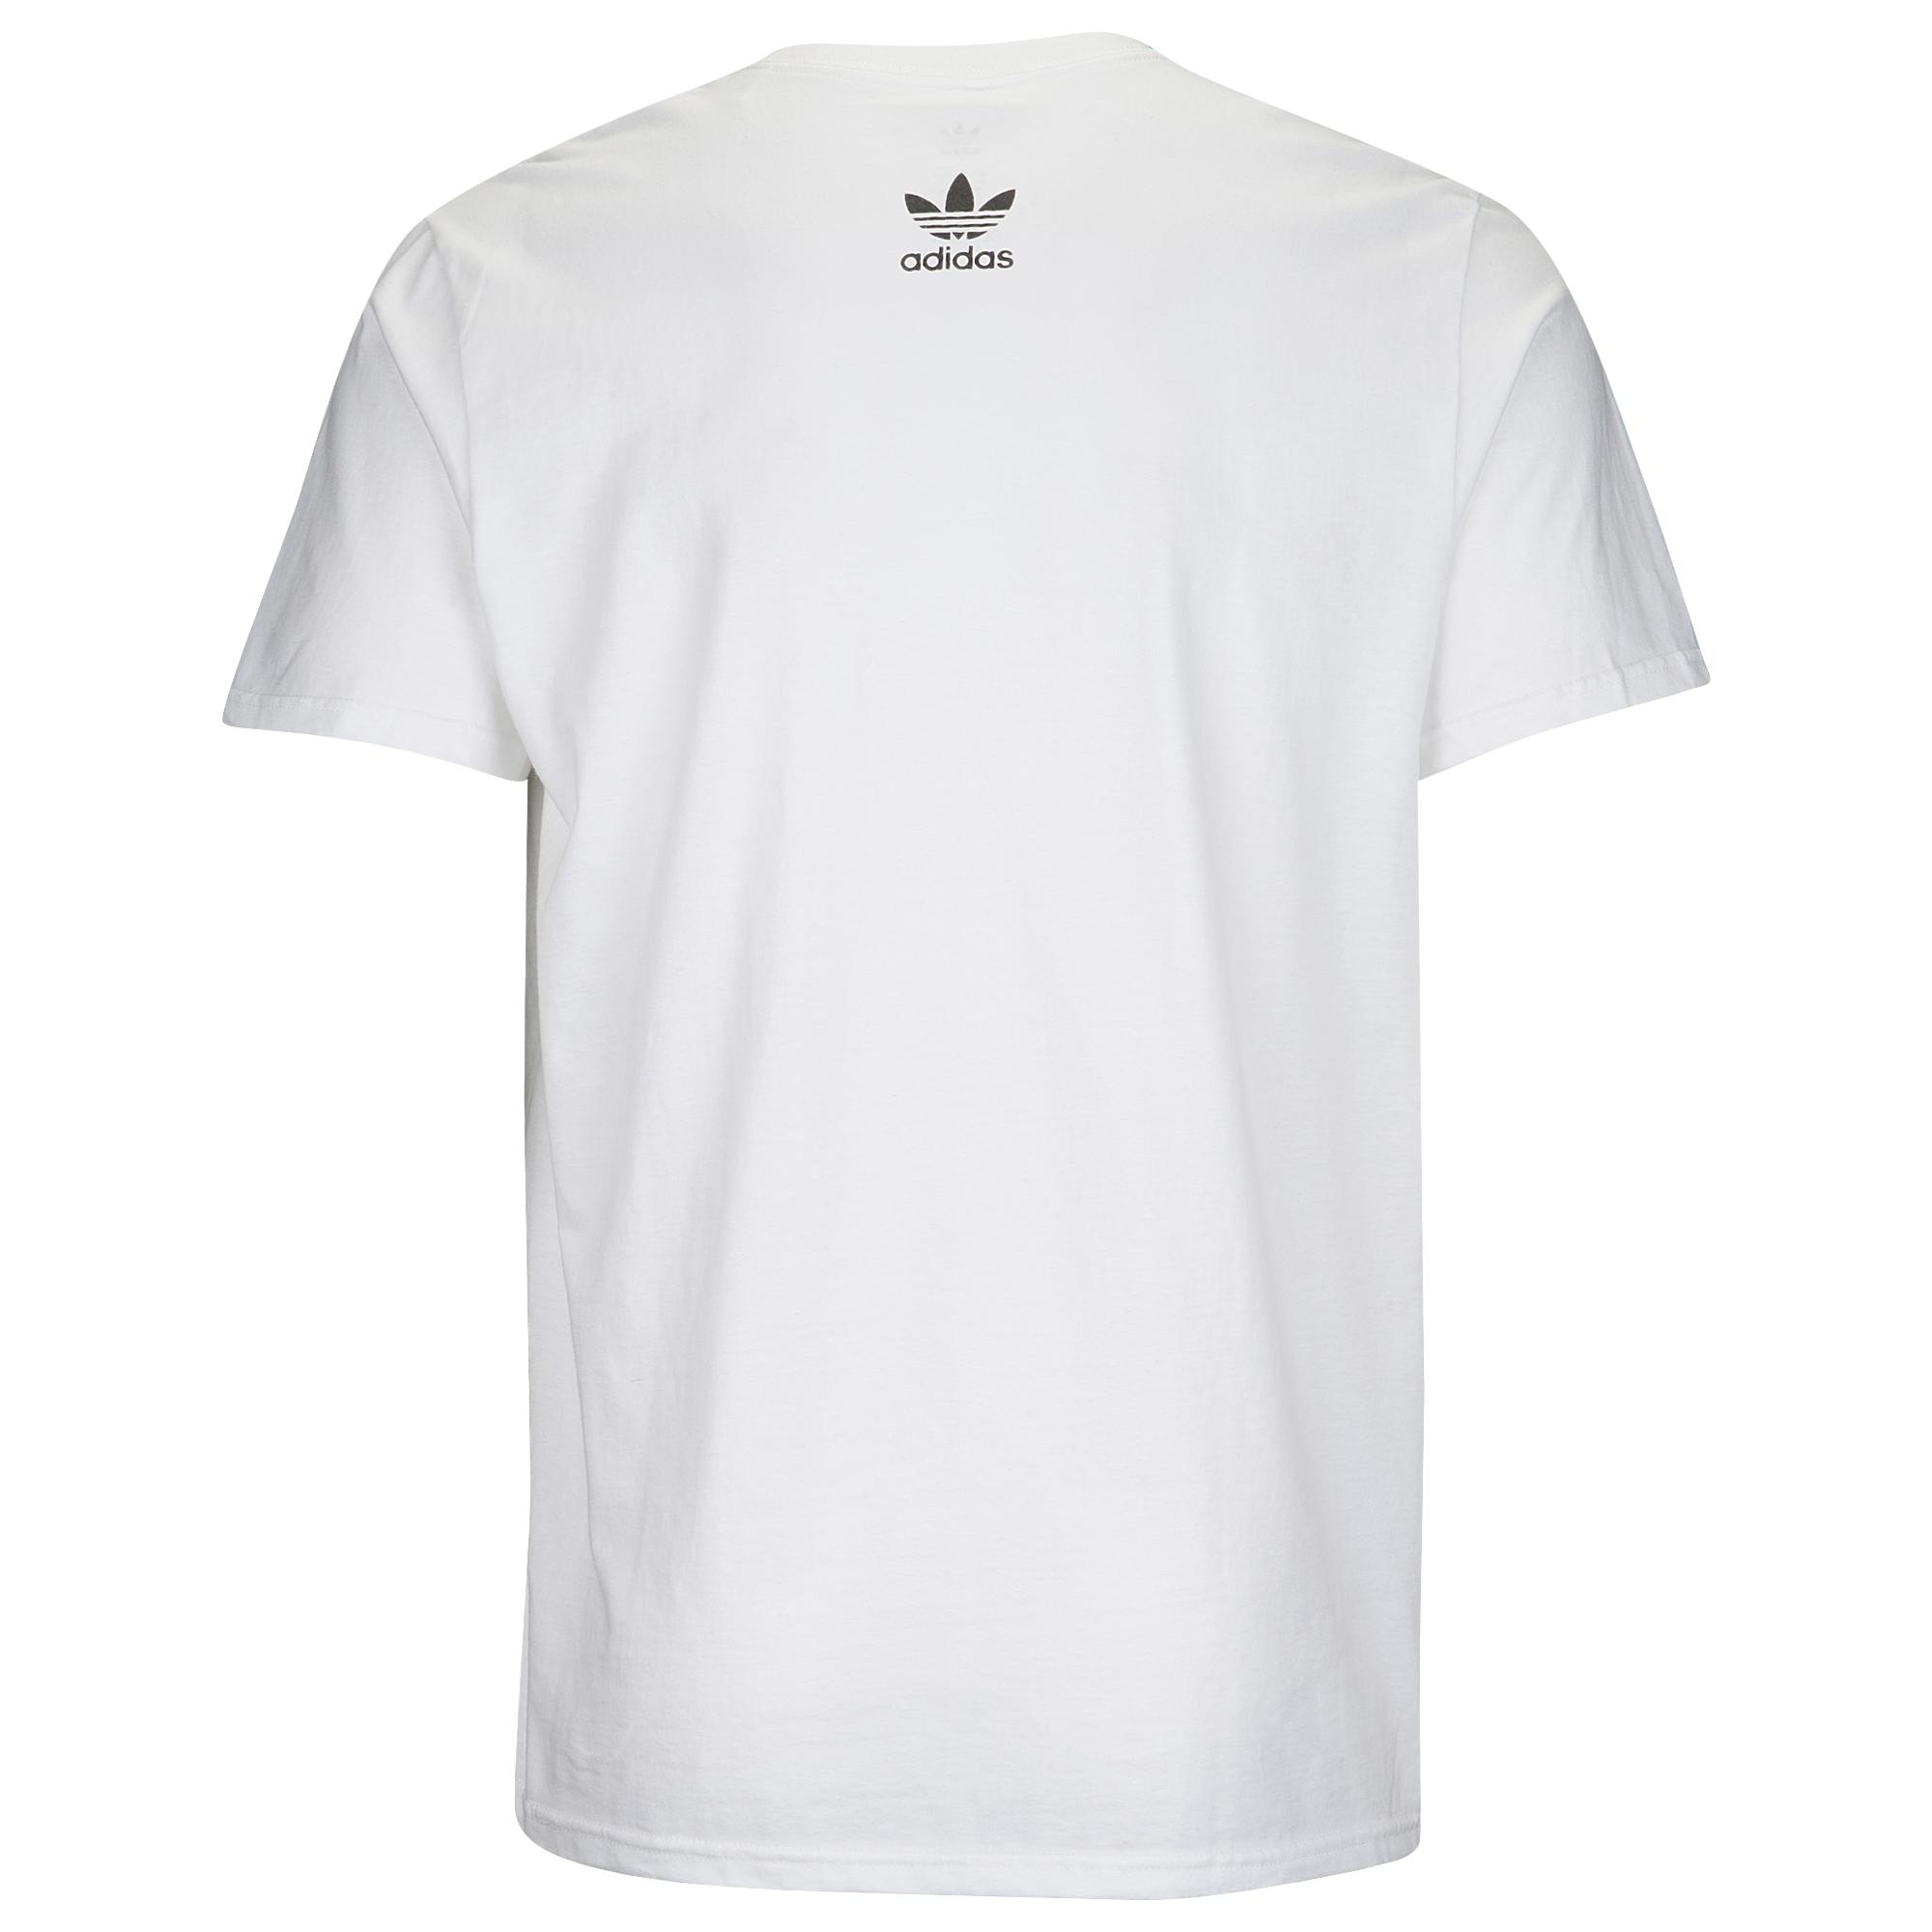 adidas Originals Cotton Tokyo Drift T-shirt in White/Grey (White) for ...